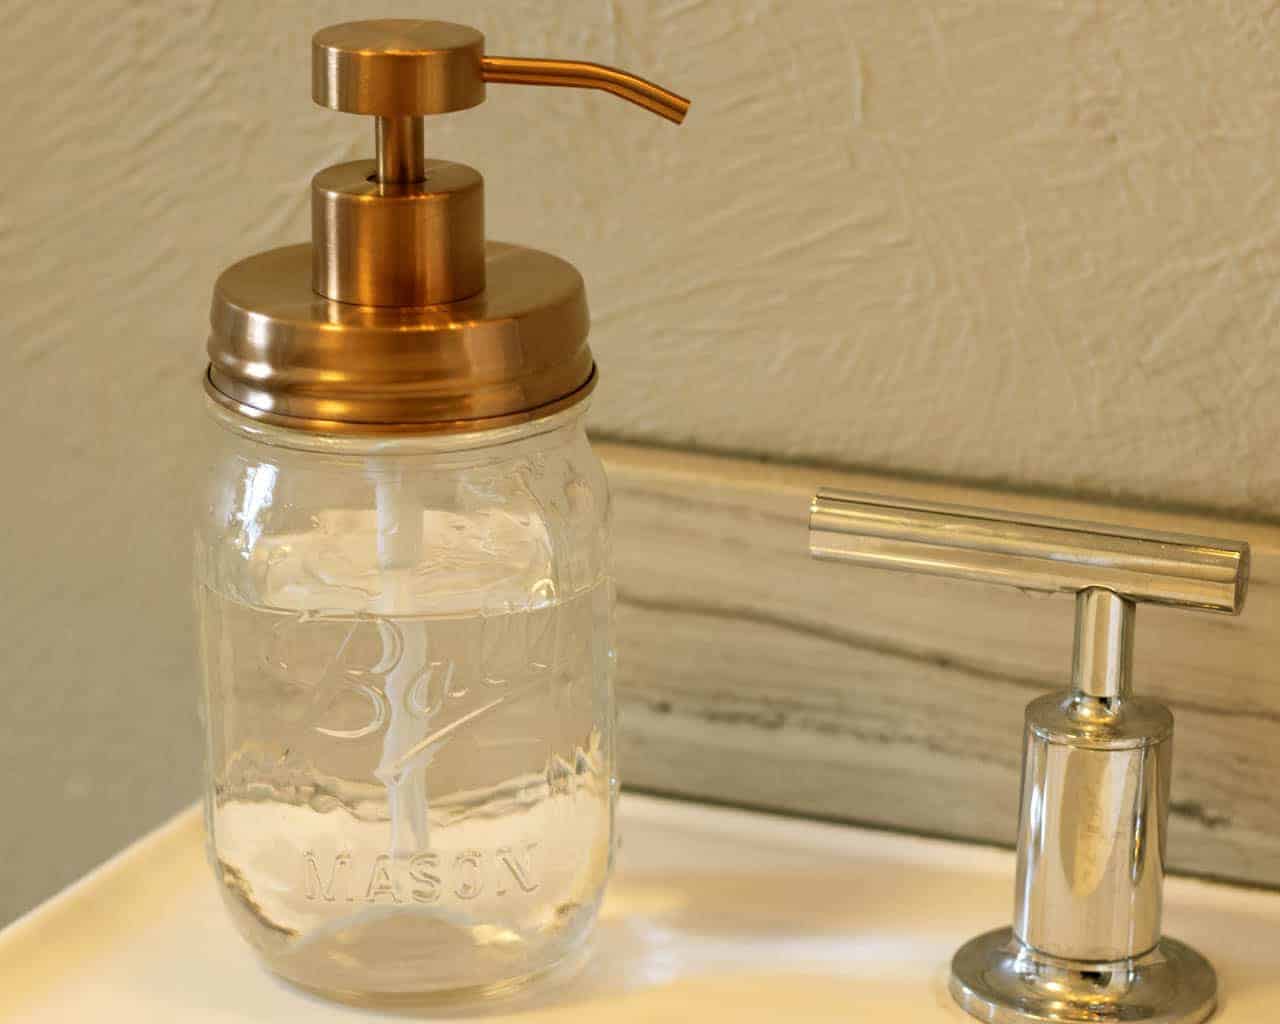 mason-jar-lifestyle-soap-pump-dispenser-lid-kit-matte-rose-gold-#2-pint-ball-jar-sink